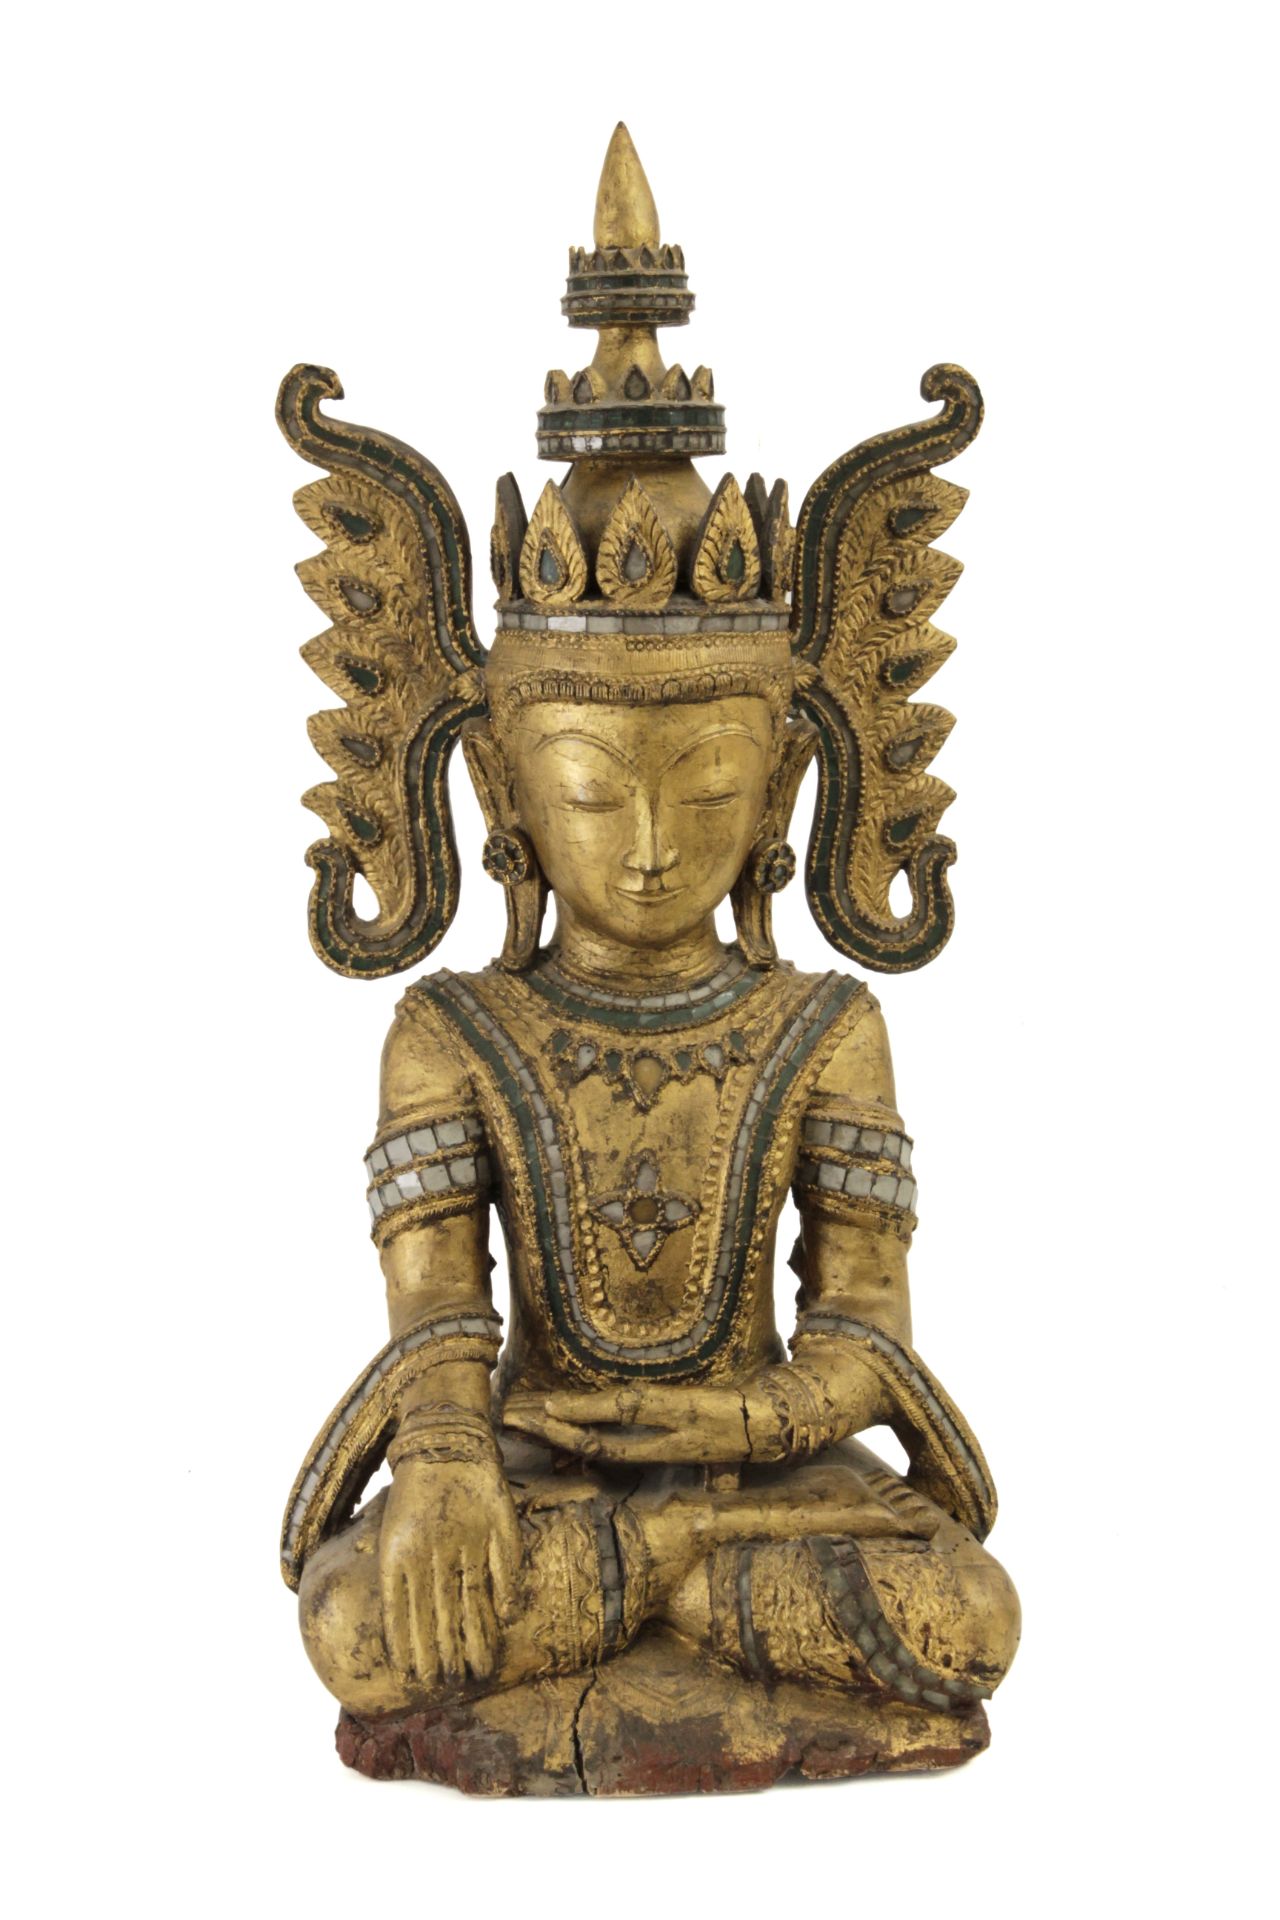 A 19th-20th centuries Cambodian Mâravijaya buddha sculpture